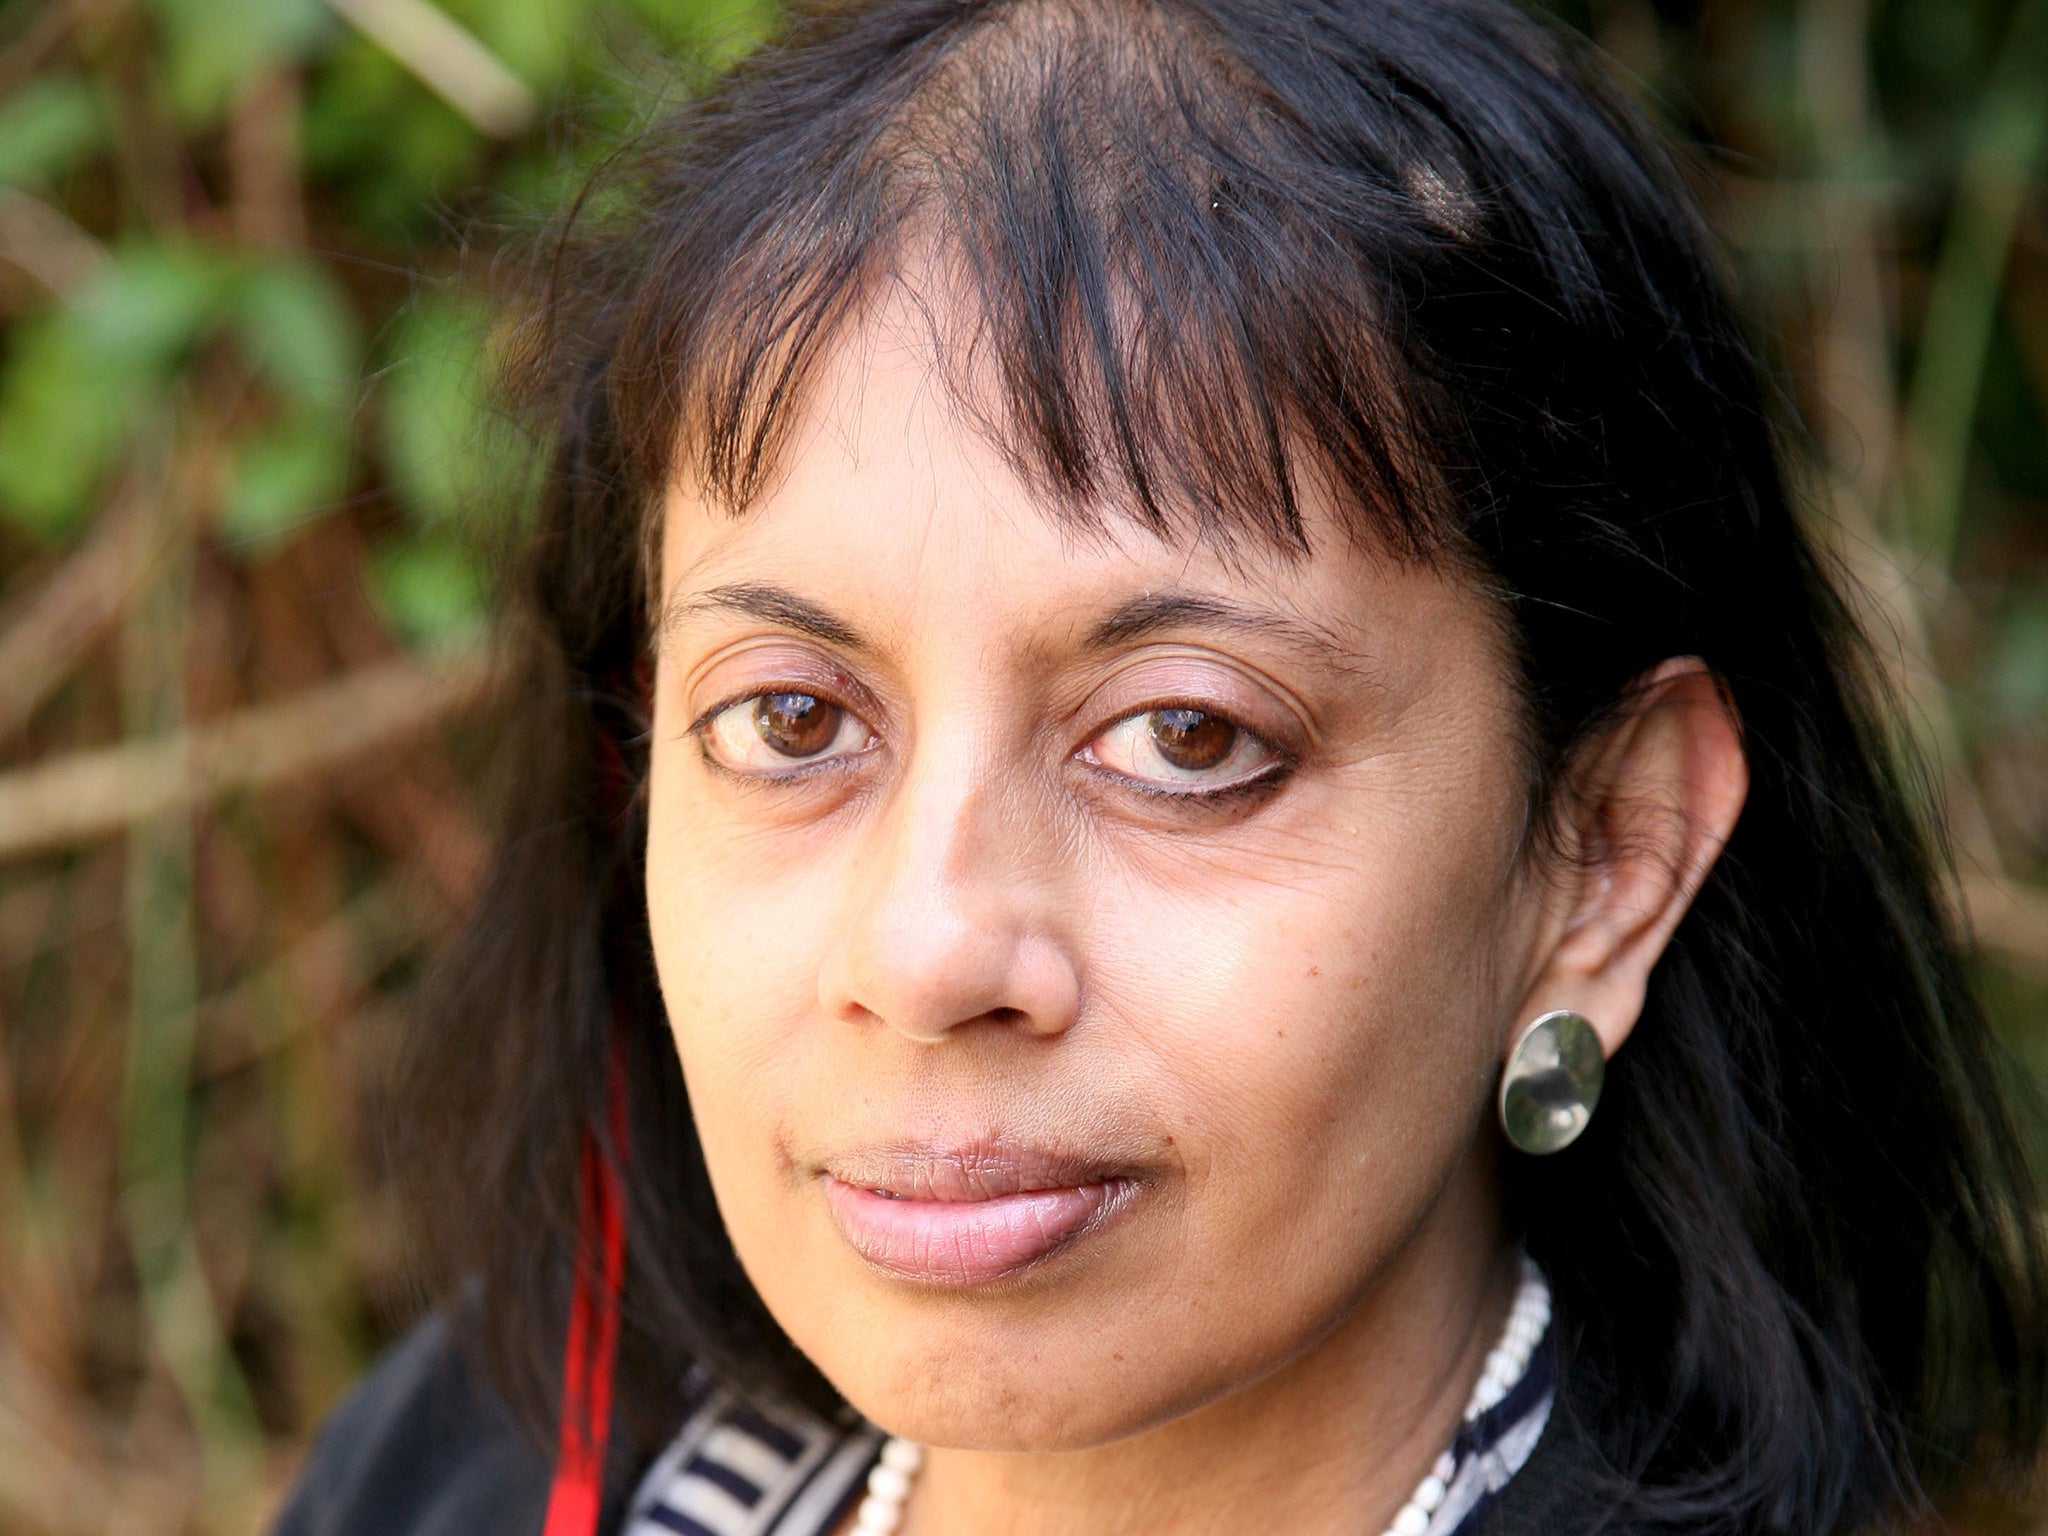 The Sri Lankan-born artist and writer Roma Tearne